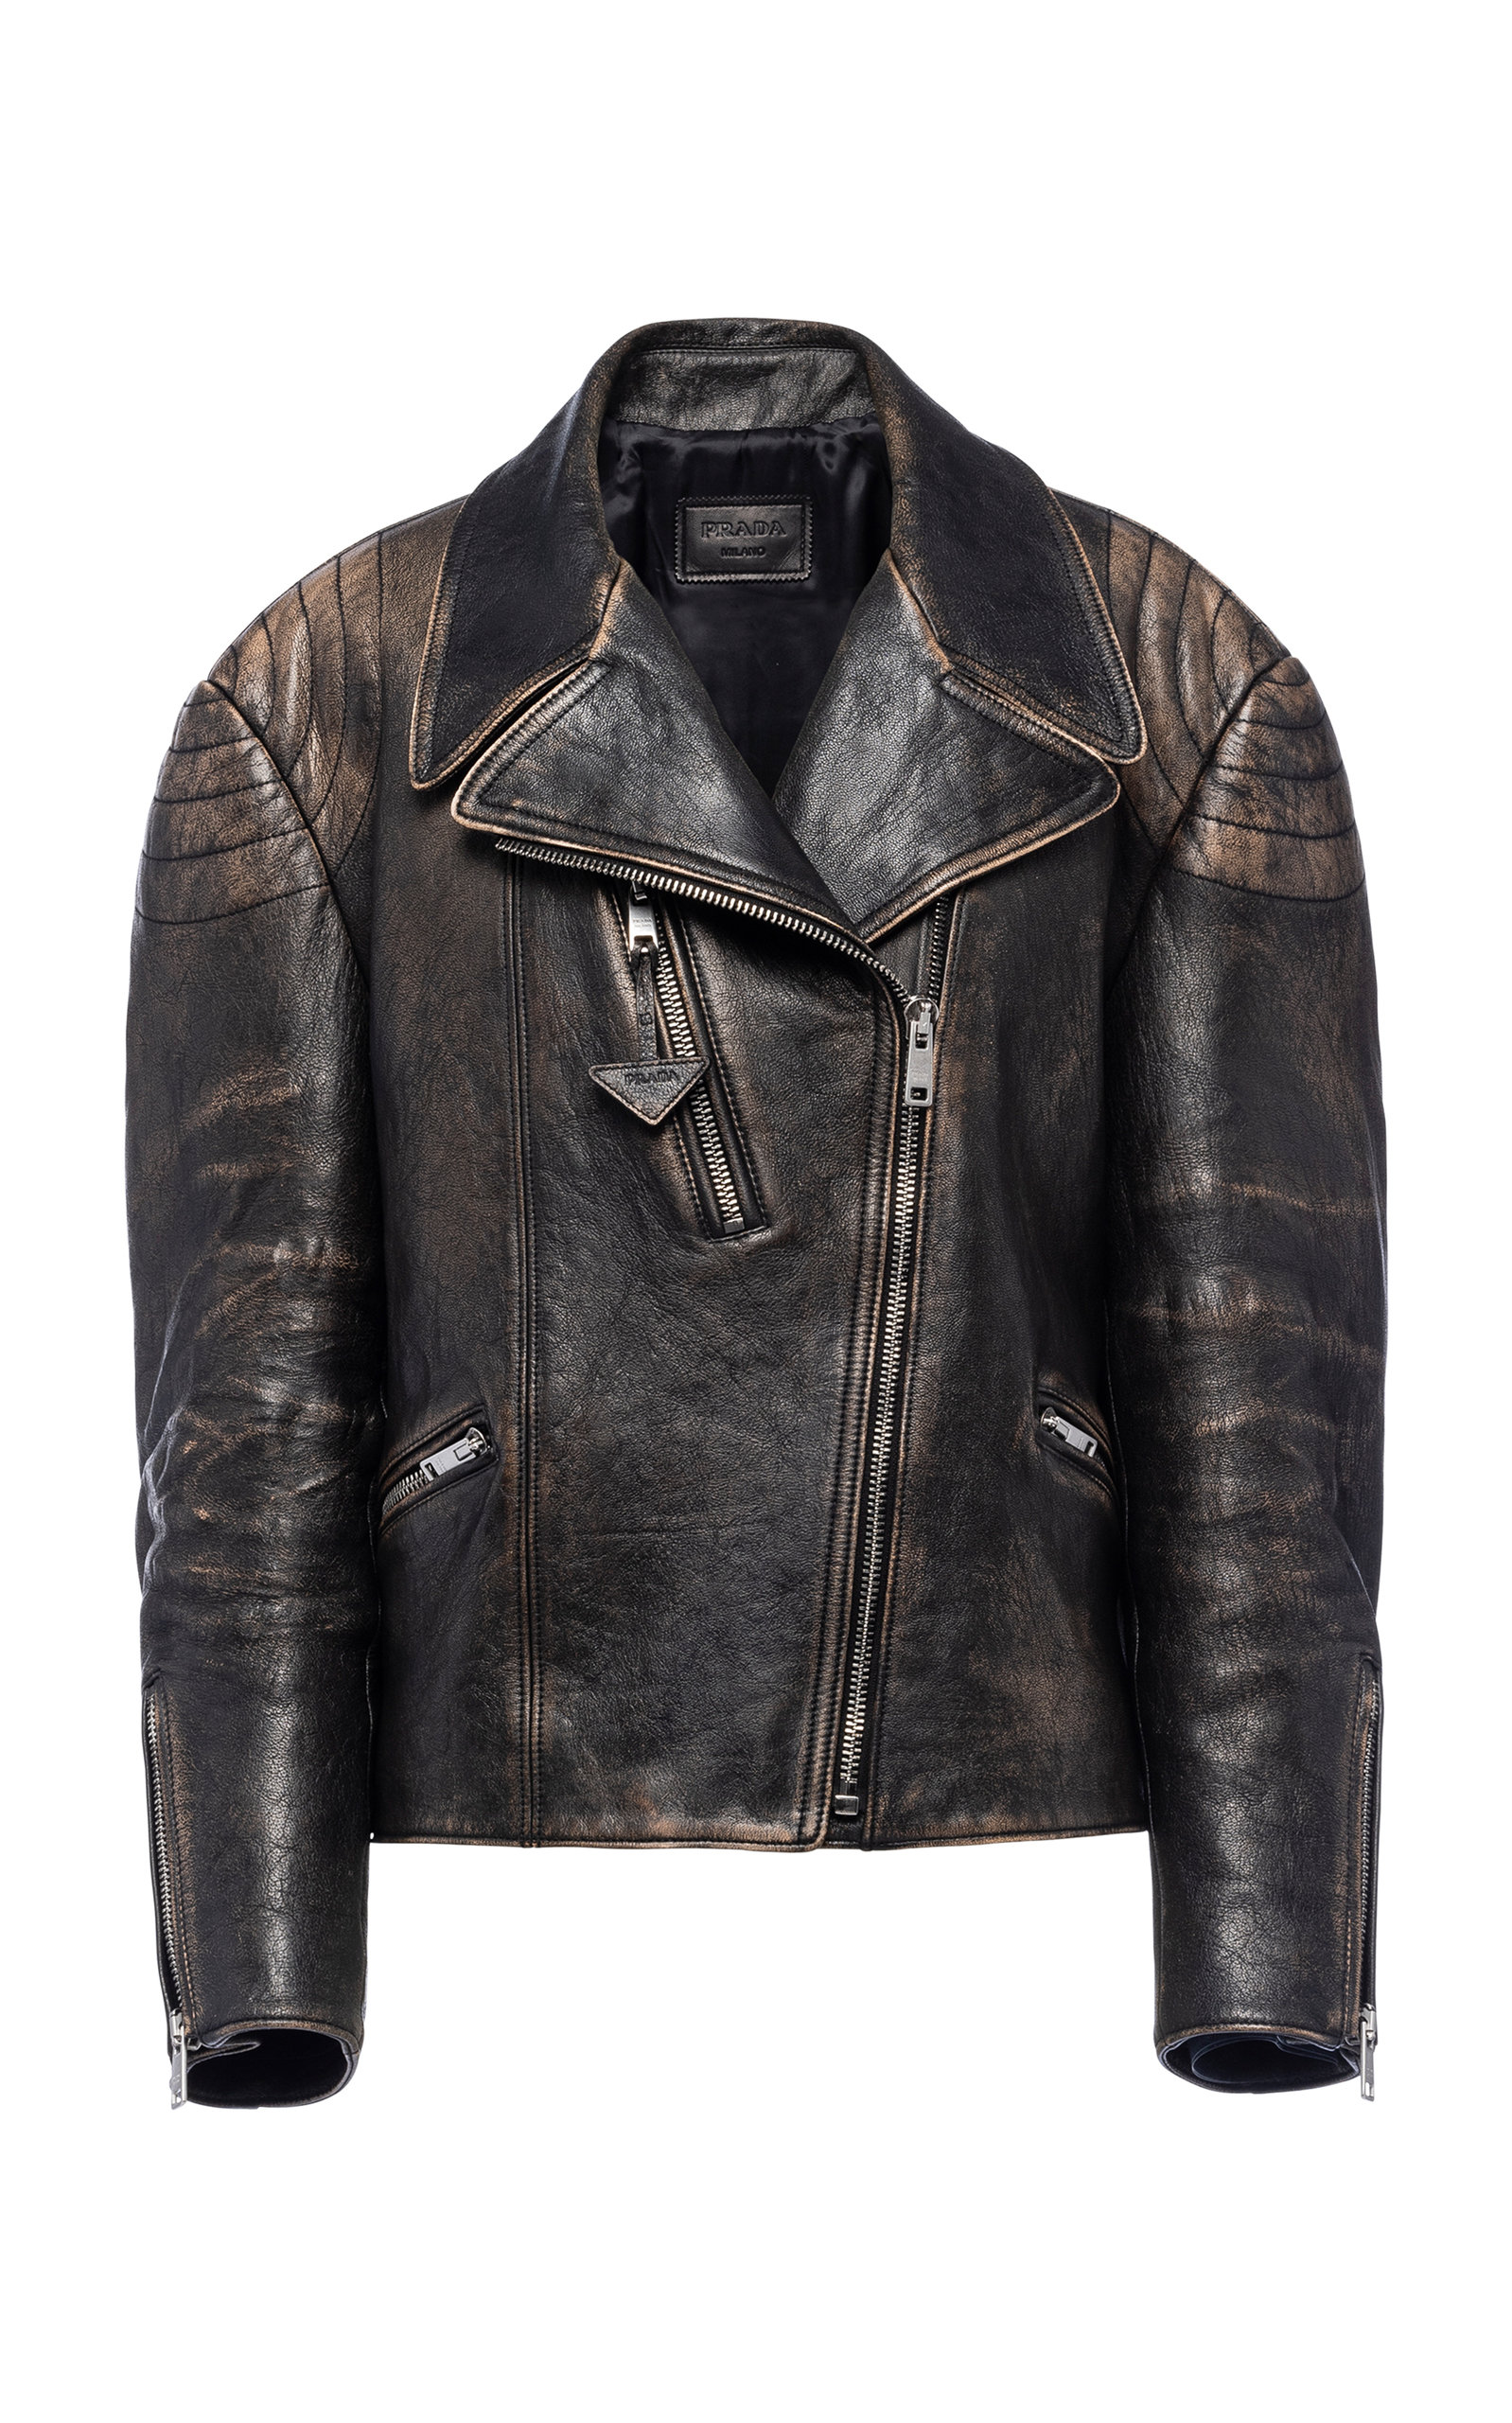 Prada Women's Textured Leather Motorcycle Jacket